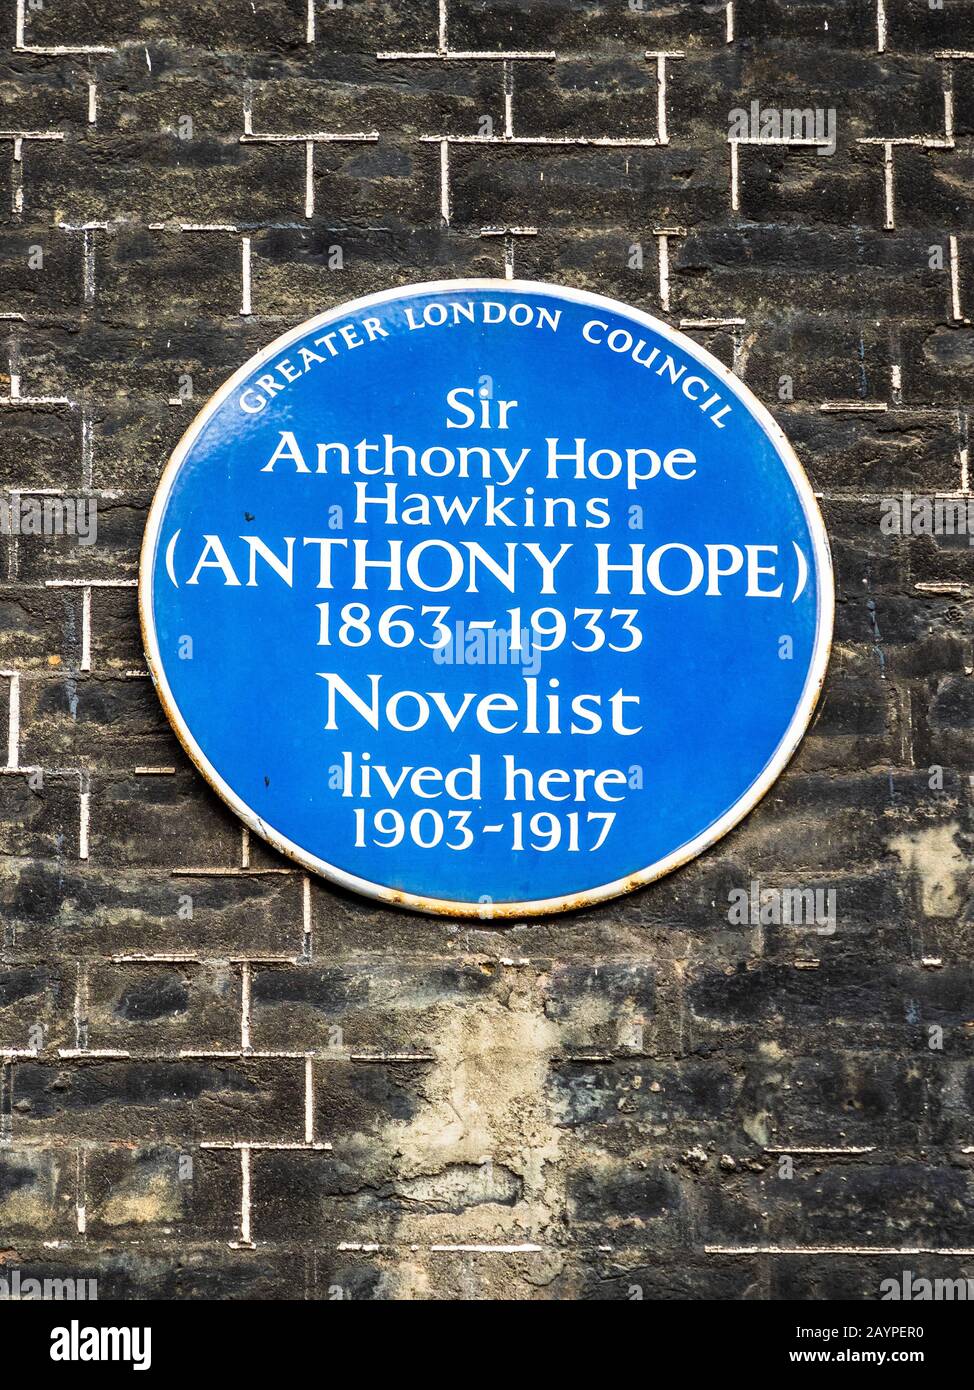 Anthony Hope Blaue Plakette. Anthony Hope Hopkins Romanautor, Autor des Gefangenen von Zenda. Blaue Plakette am 41 Bedford Square, Bloomsbury, London. Stockfoto